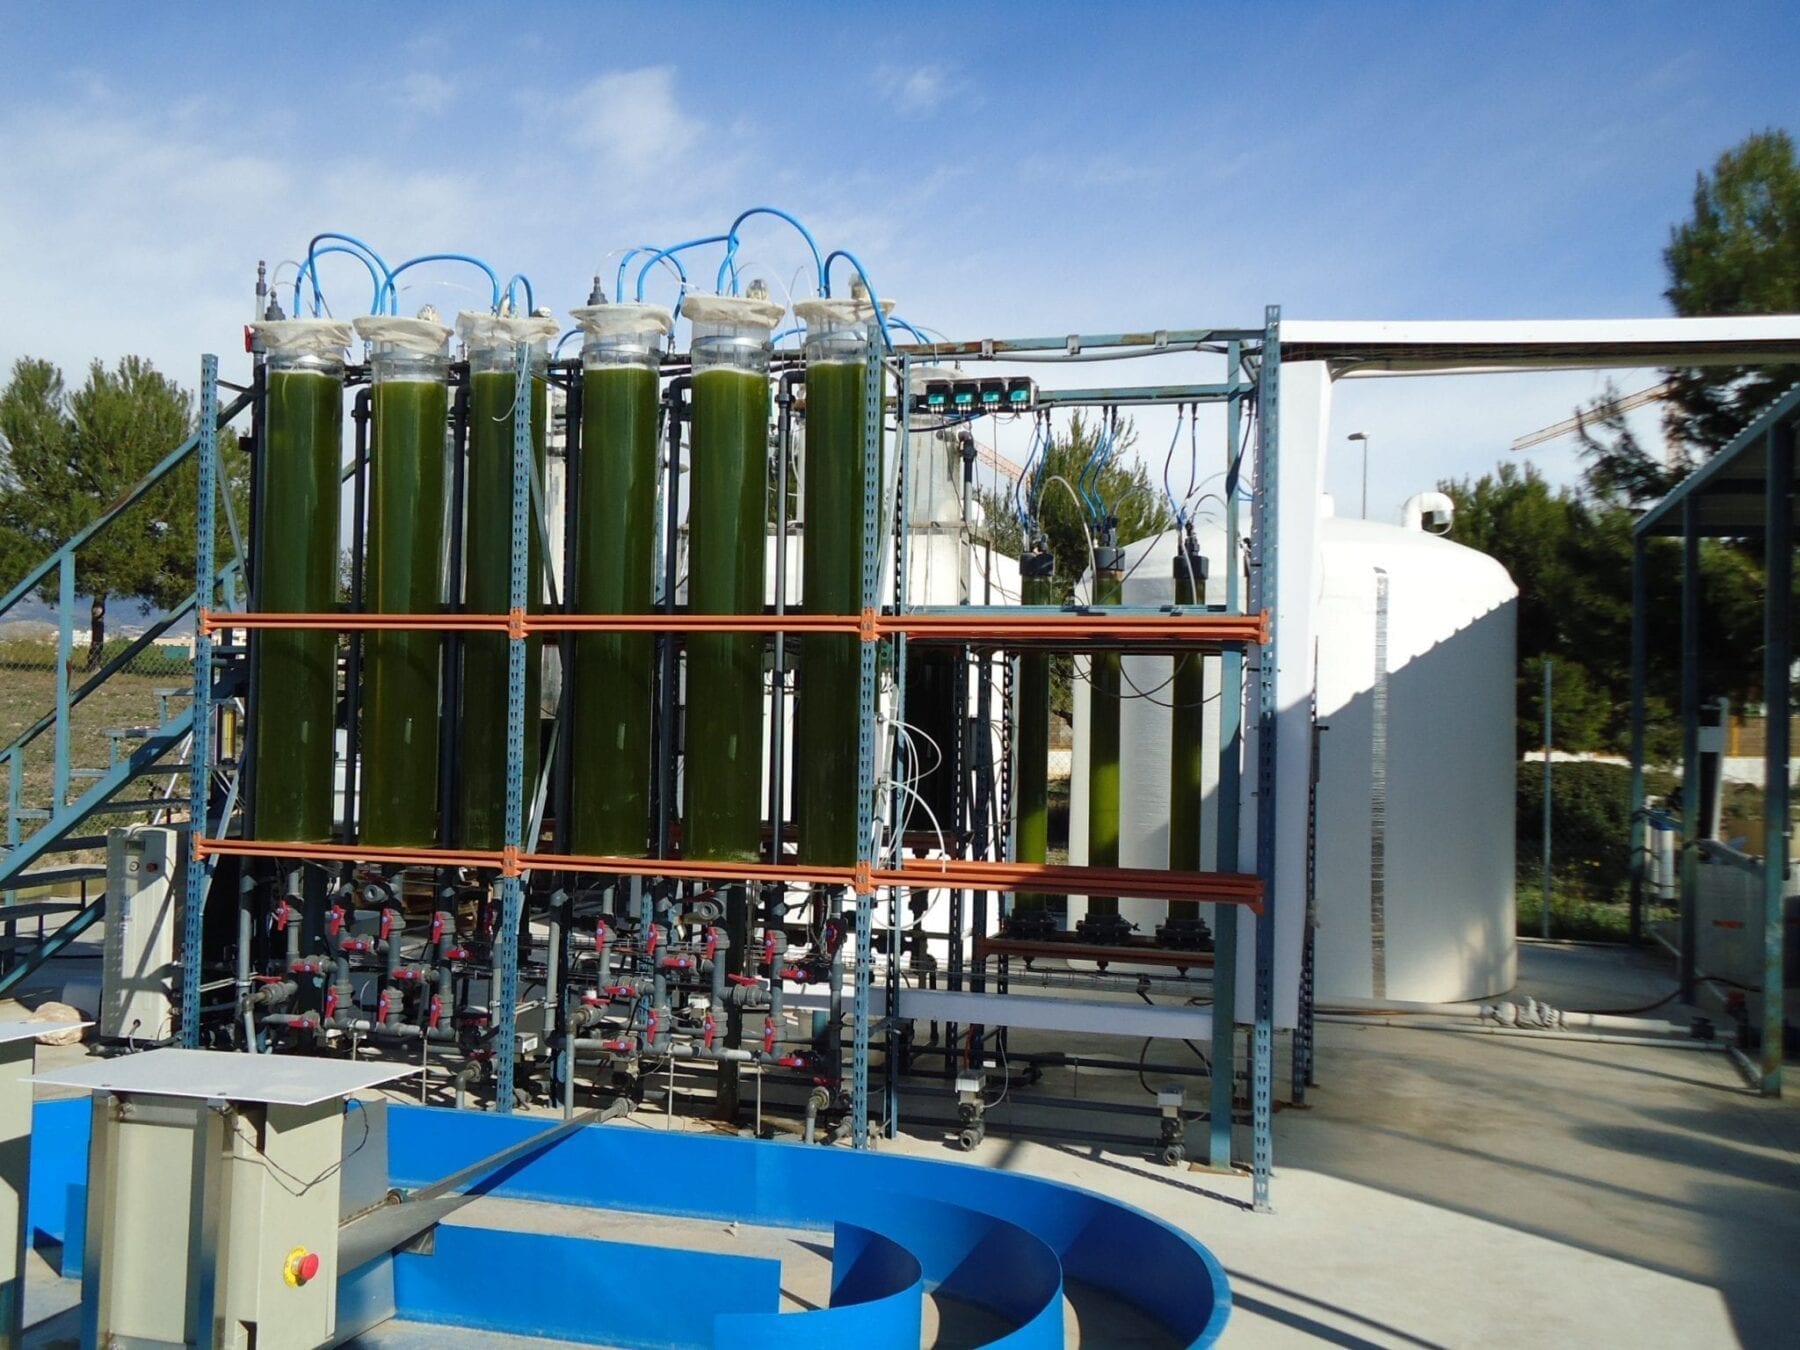 UA researchers design a photobioreactor to produce biofuel from algae